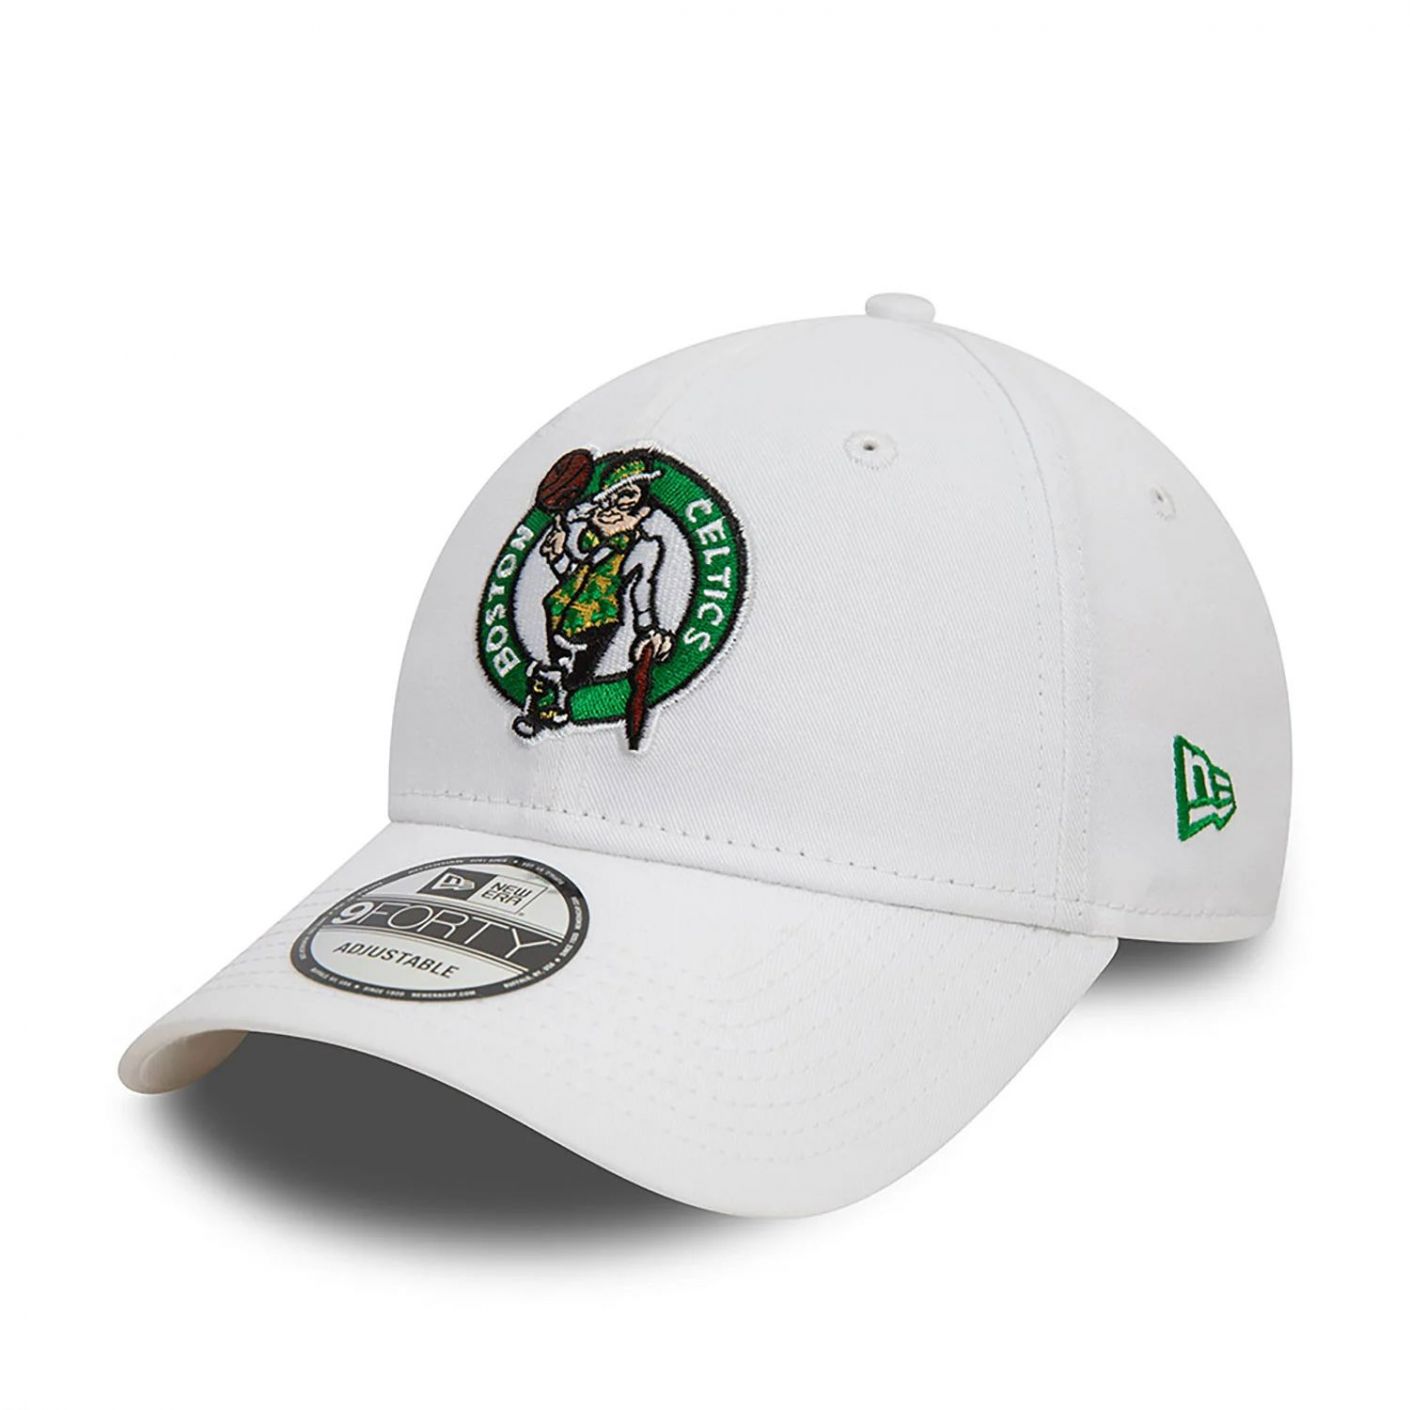 New Era Cappellino 940 Boston Celtics NBA Bianco